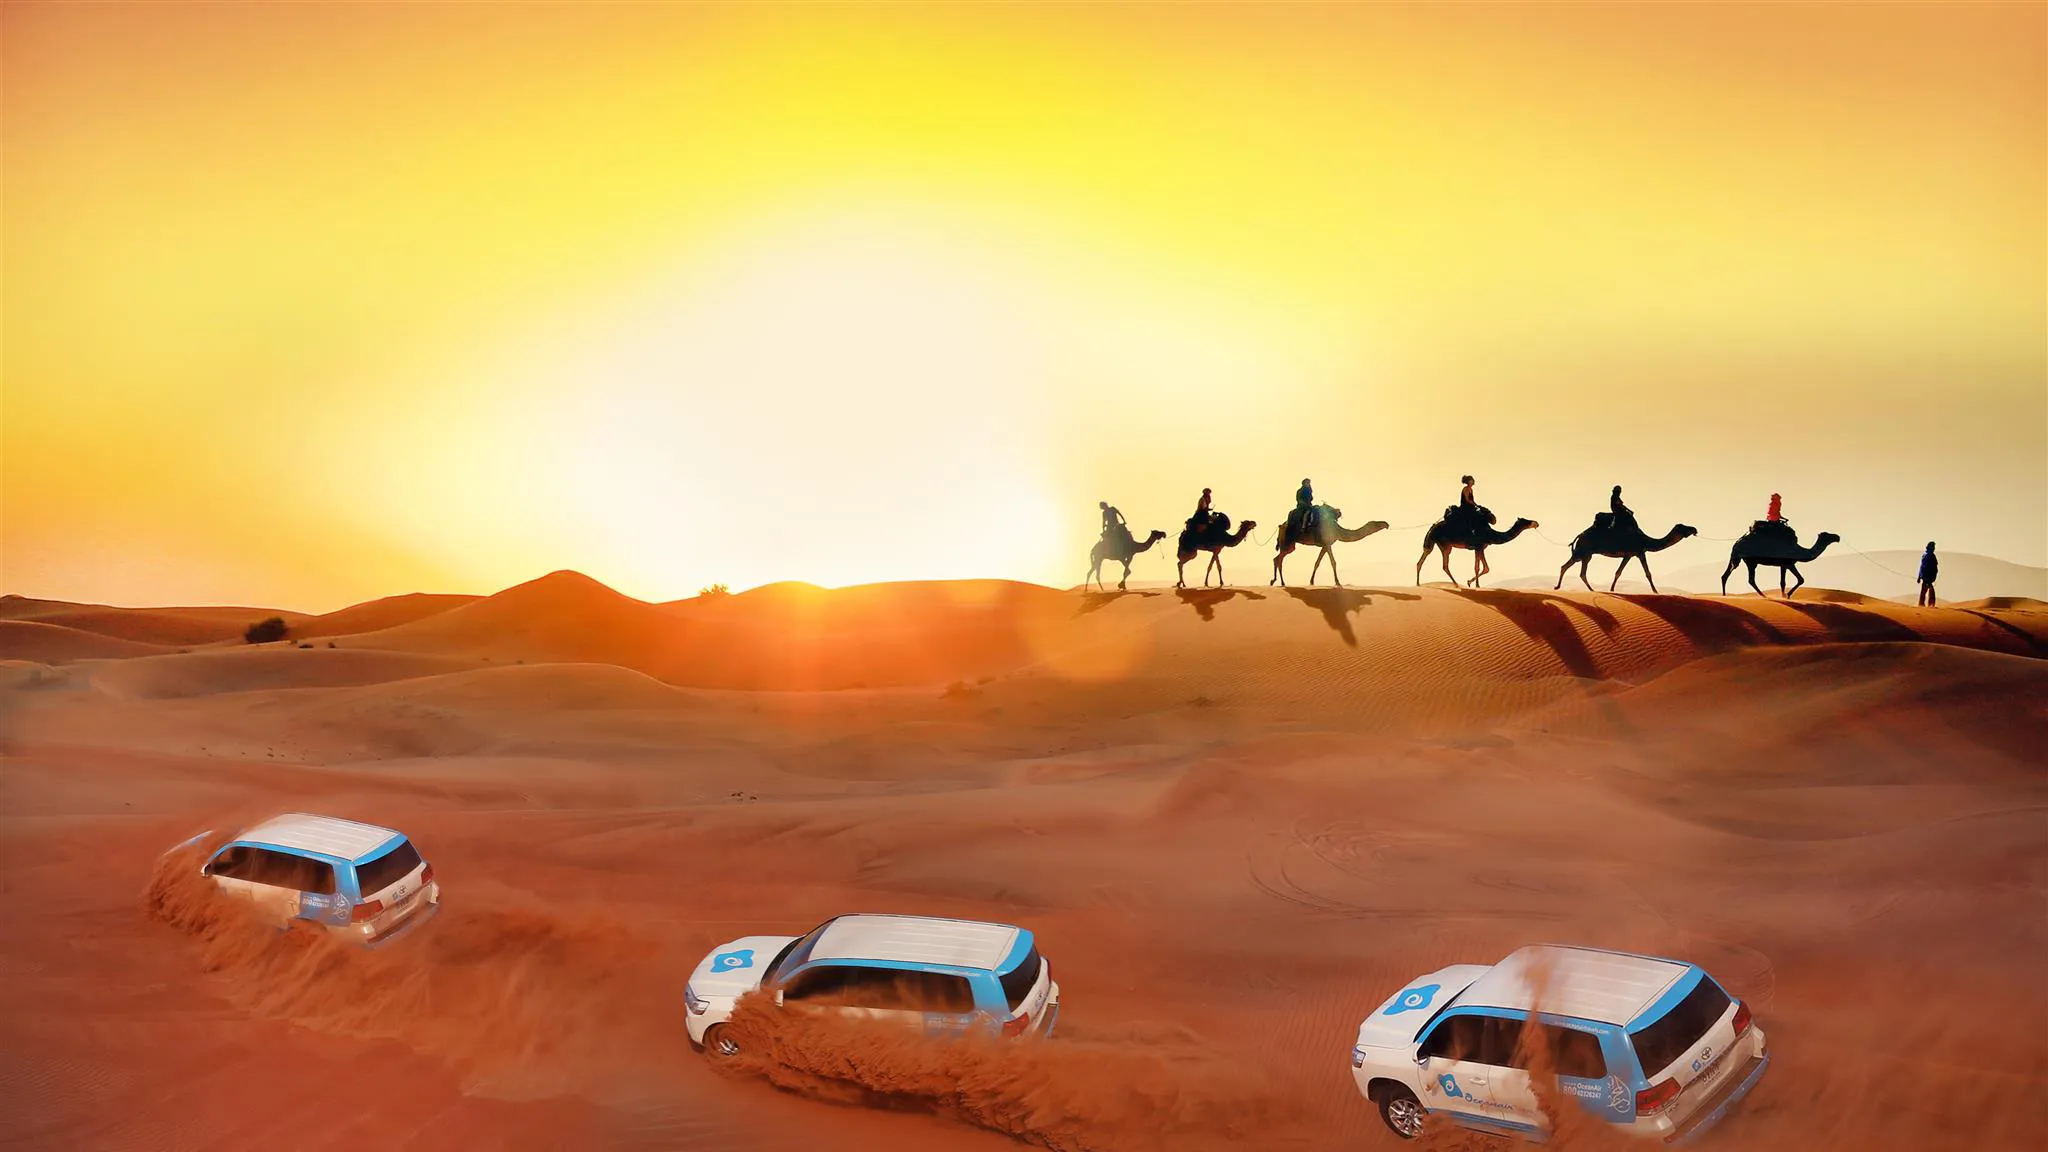 Dubai Desert safari – Top Tips For a Memorable Trip